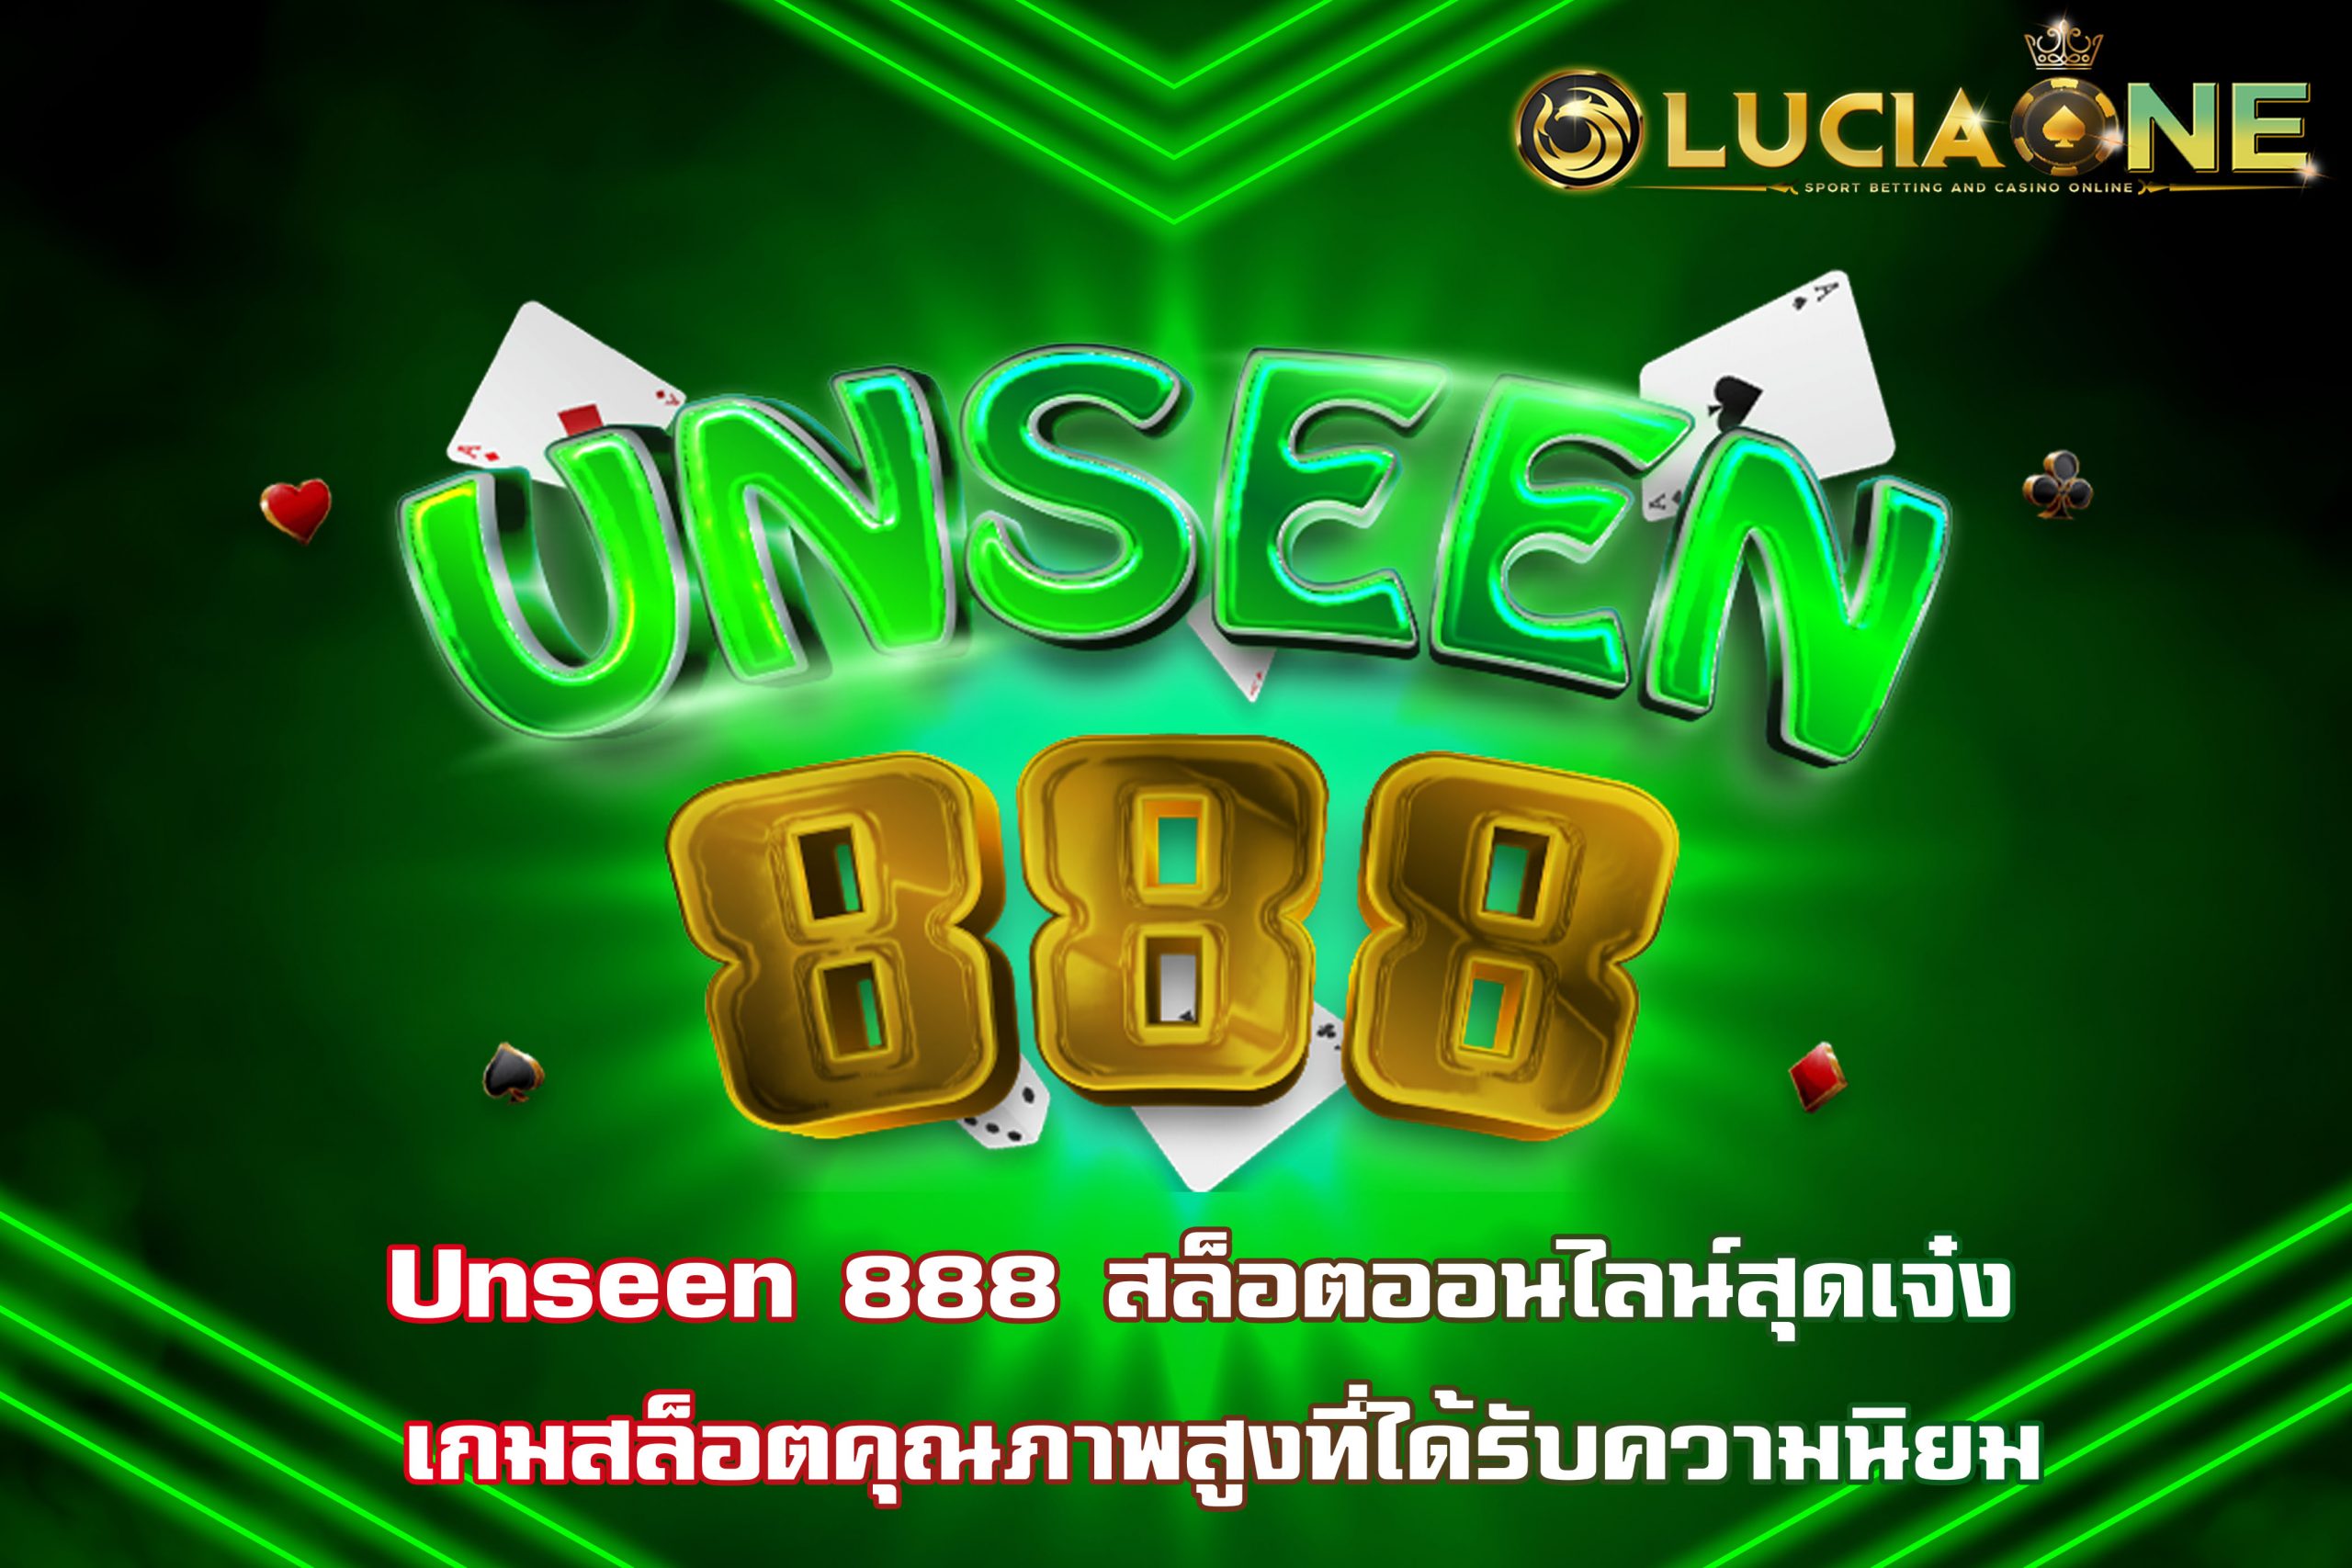 Unseen 888 สล็อตออนไลน์สุดเจ๋ง เกมสล็อตคุณภาพสูงที่ได้รับความนิยม